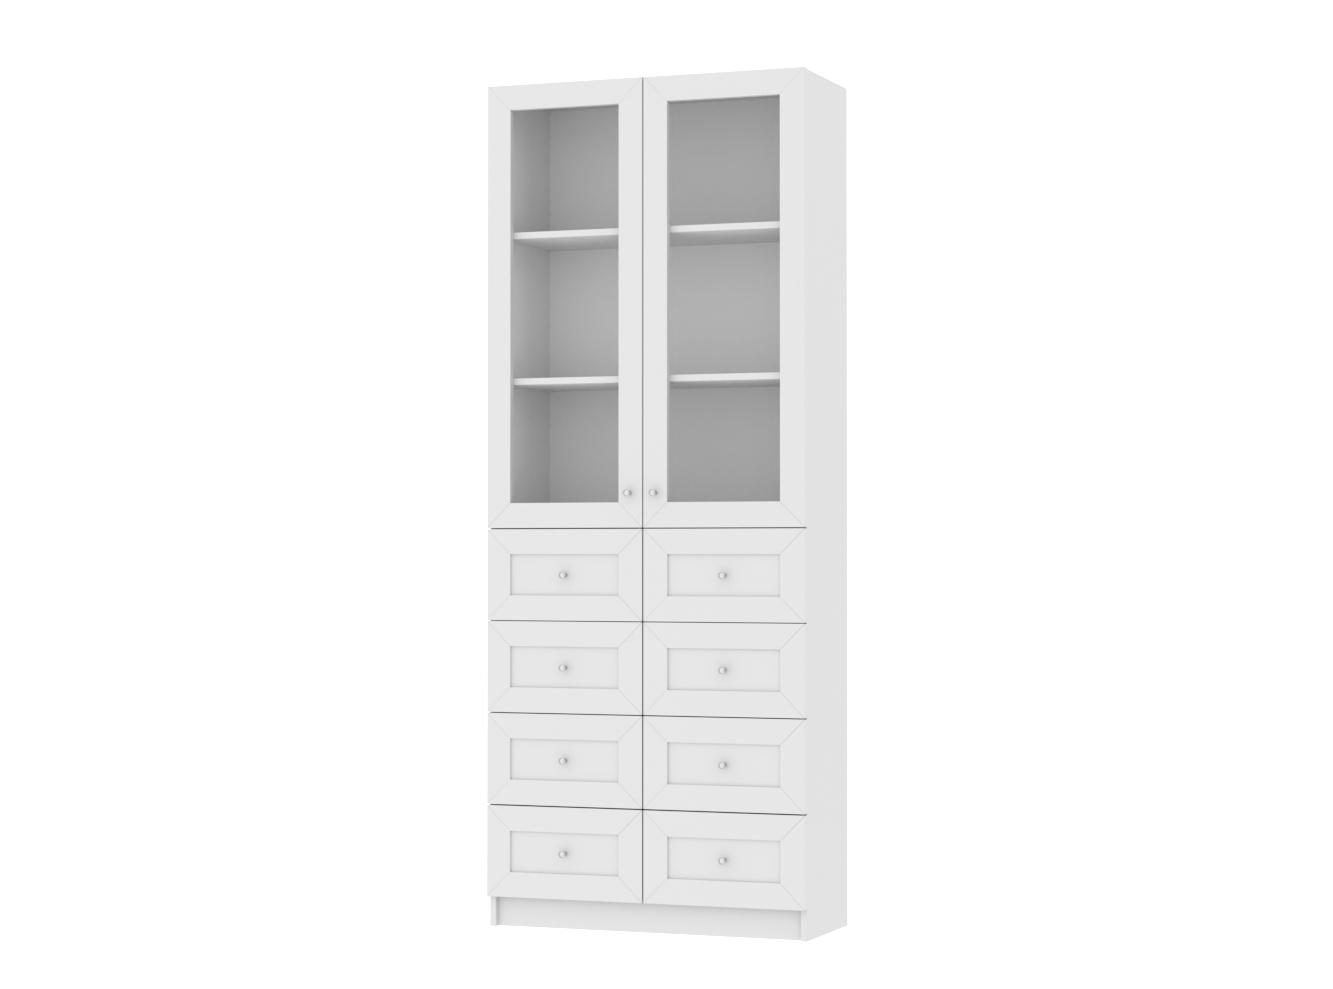  Книжный шкаф Билли 318 white ИКЕА (IKEA) изображение товара